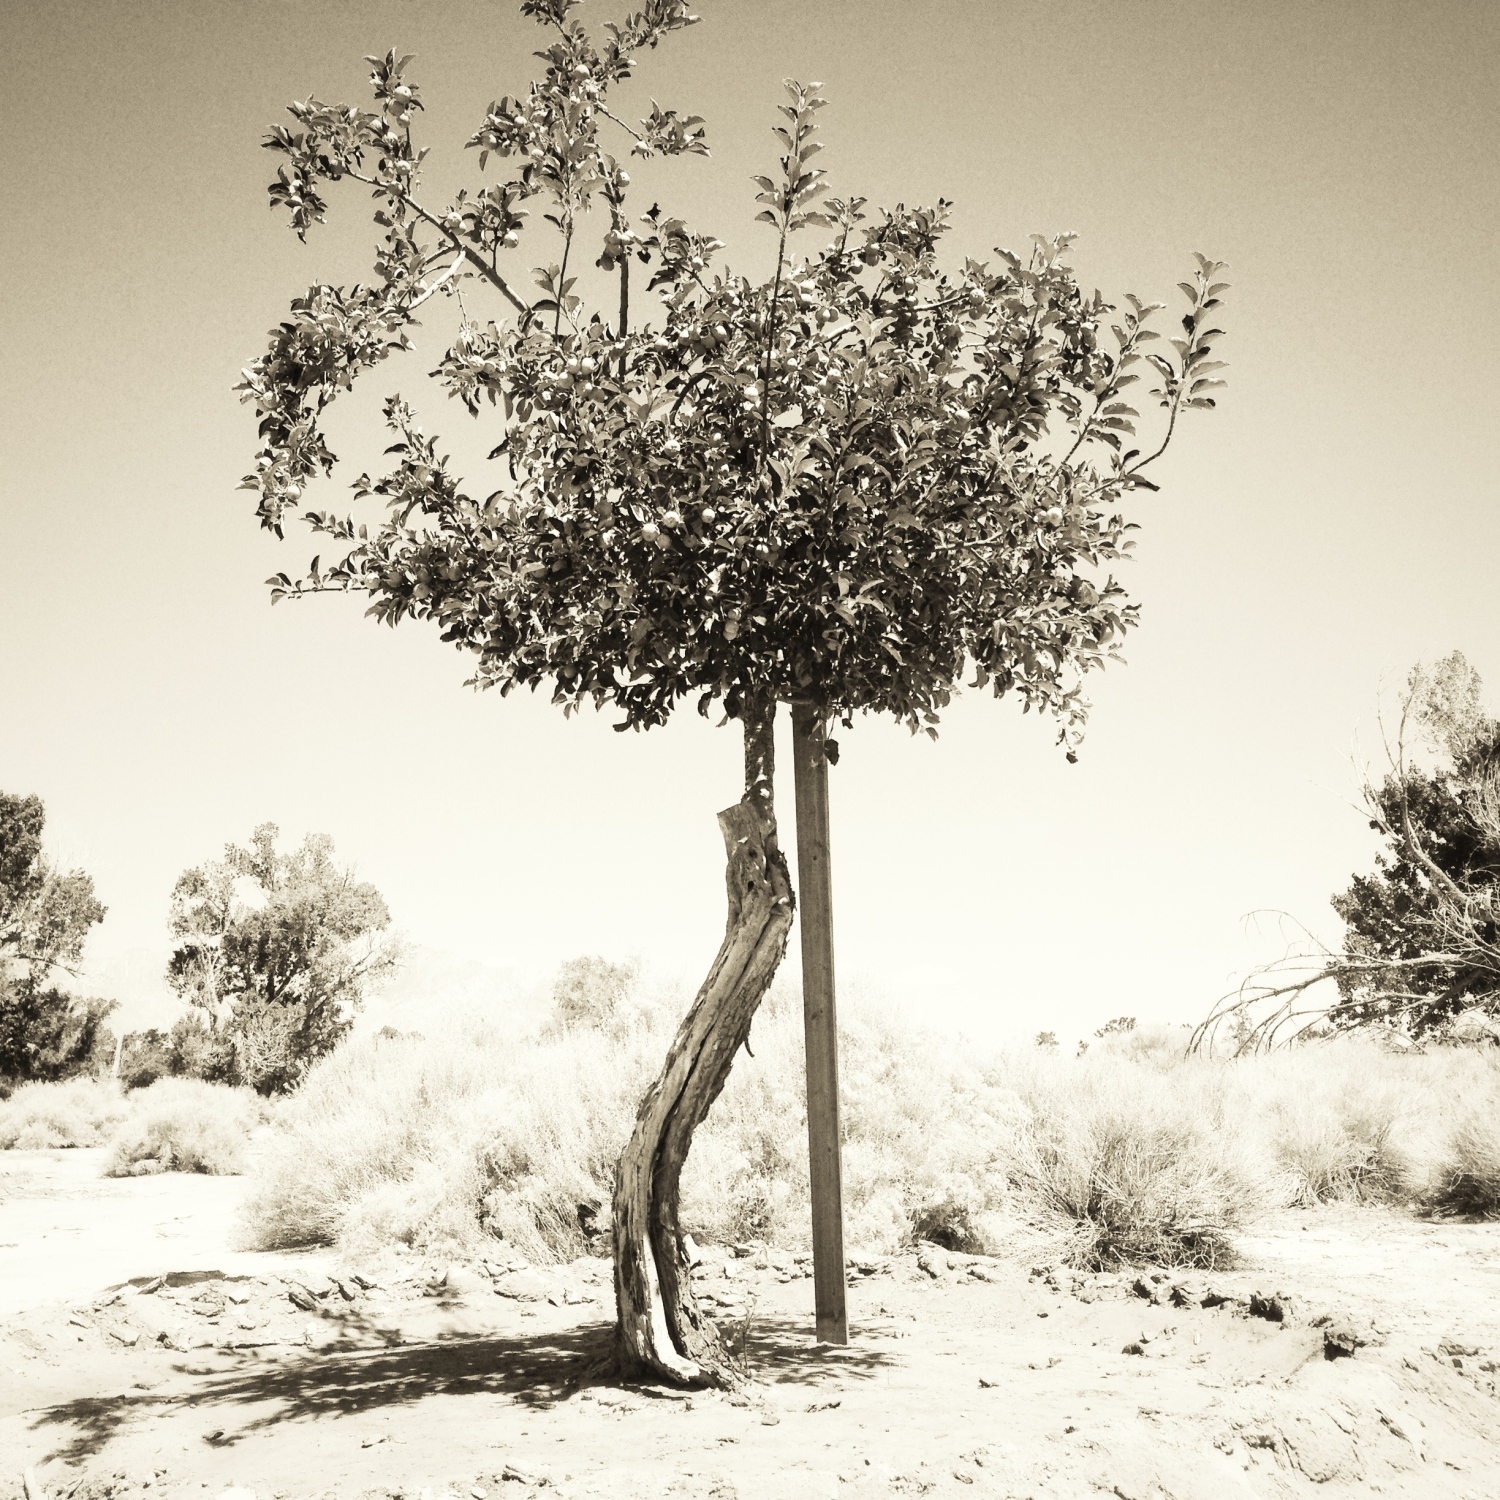 fruit tree at Manzanar by Judith Monroe